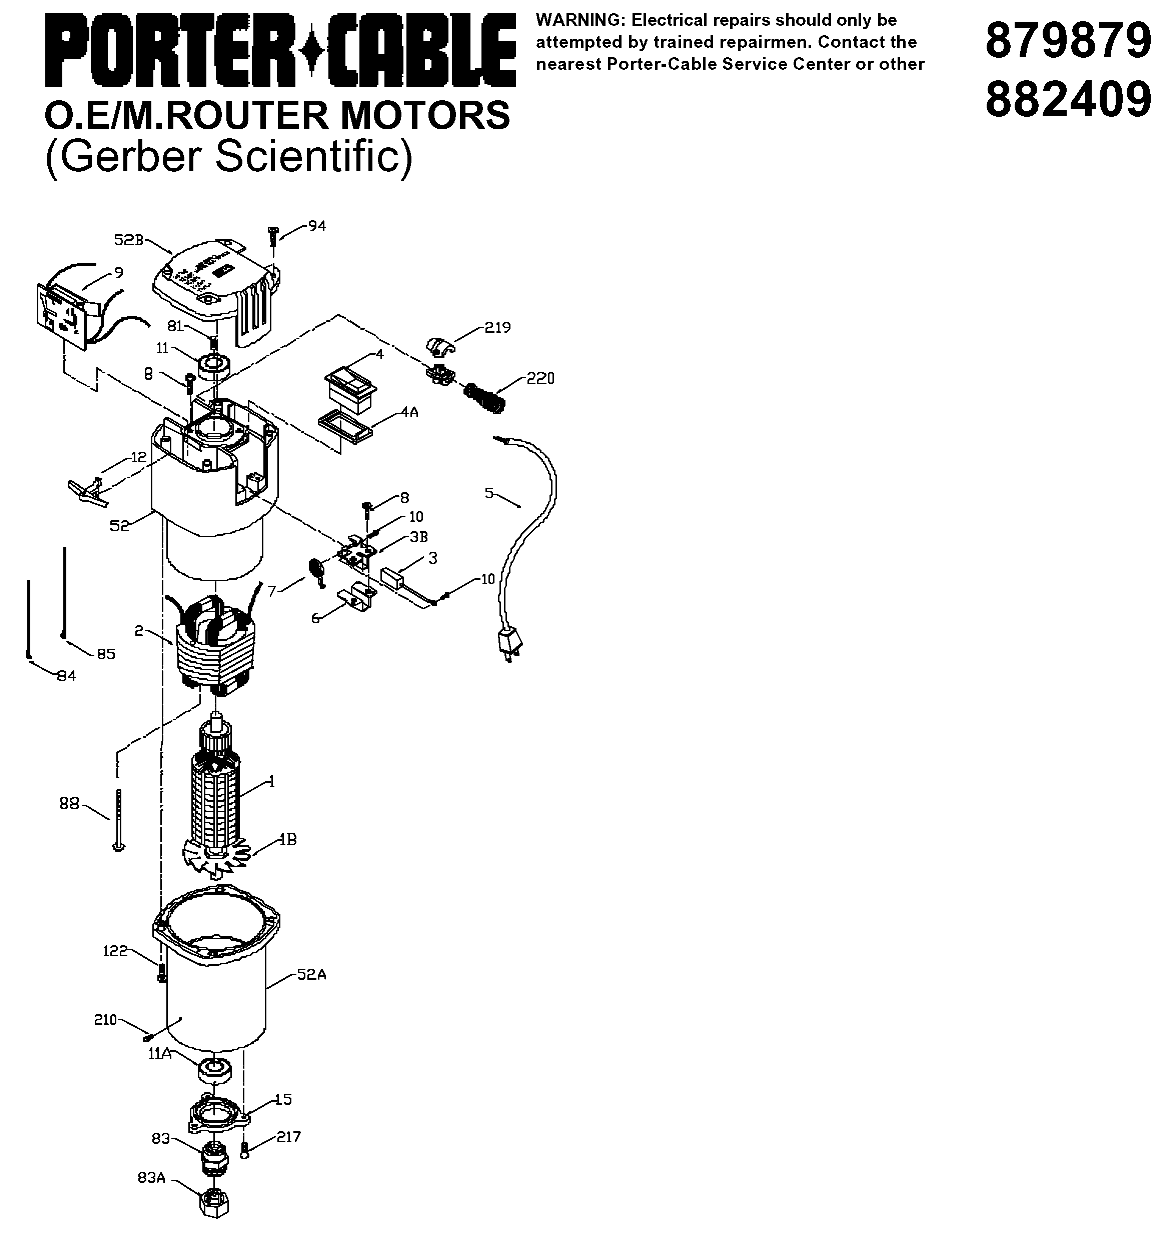 Porter Cable 882409 Router Parts